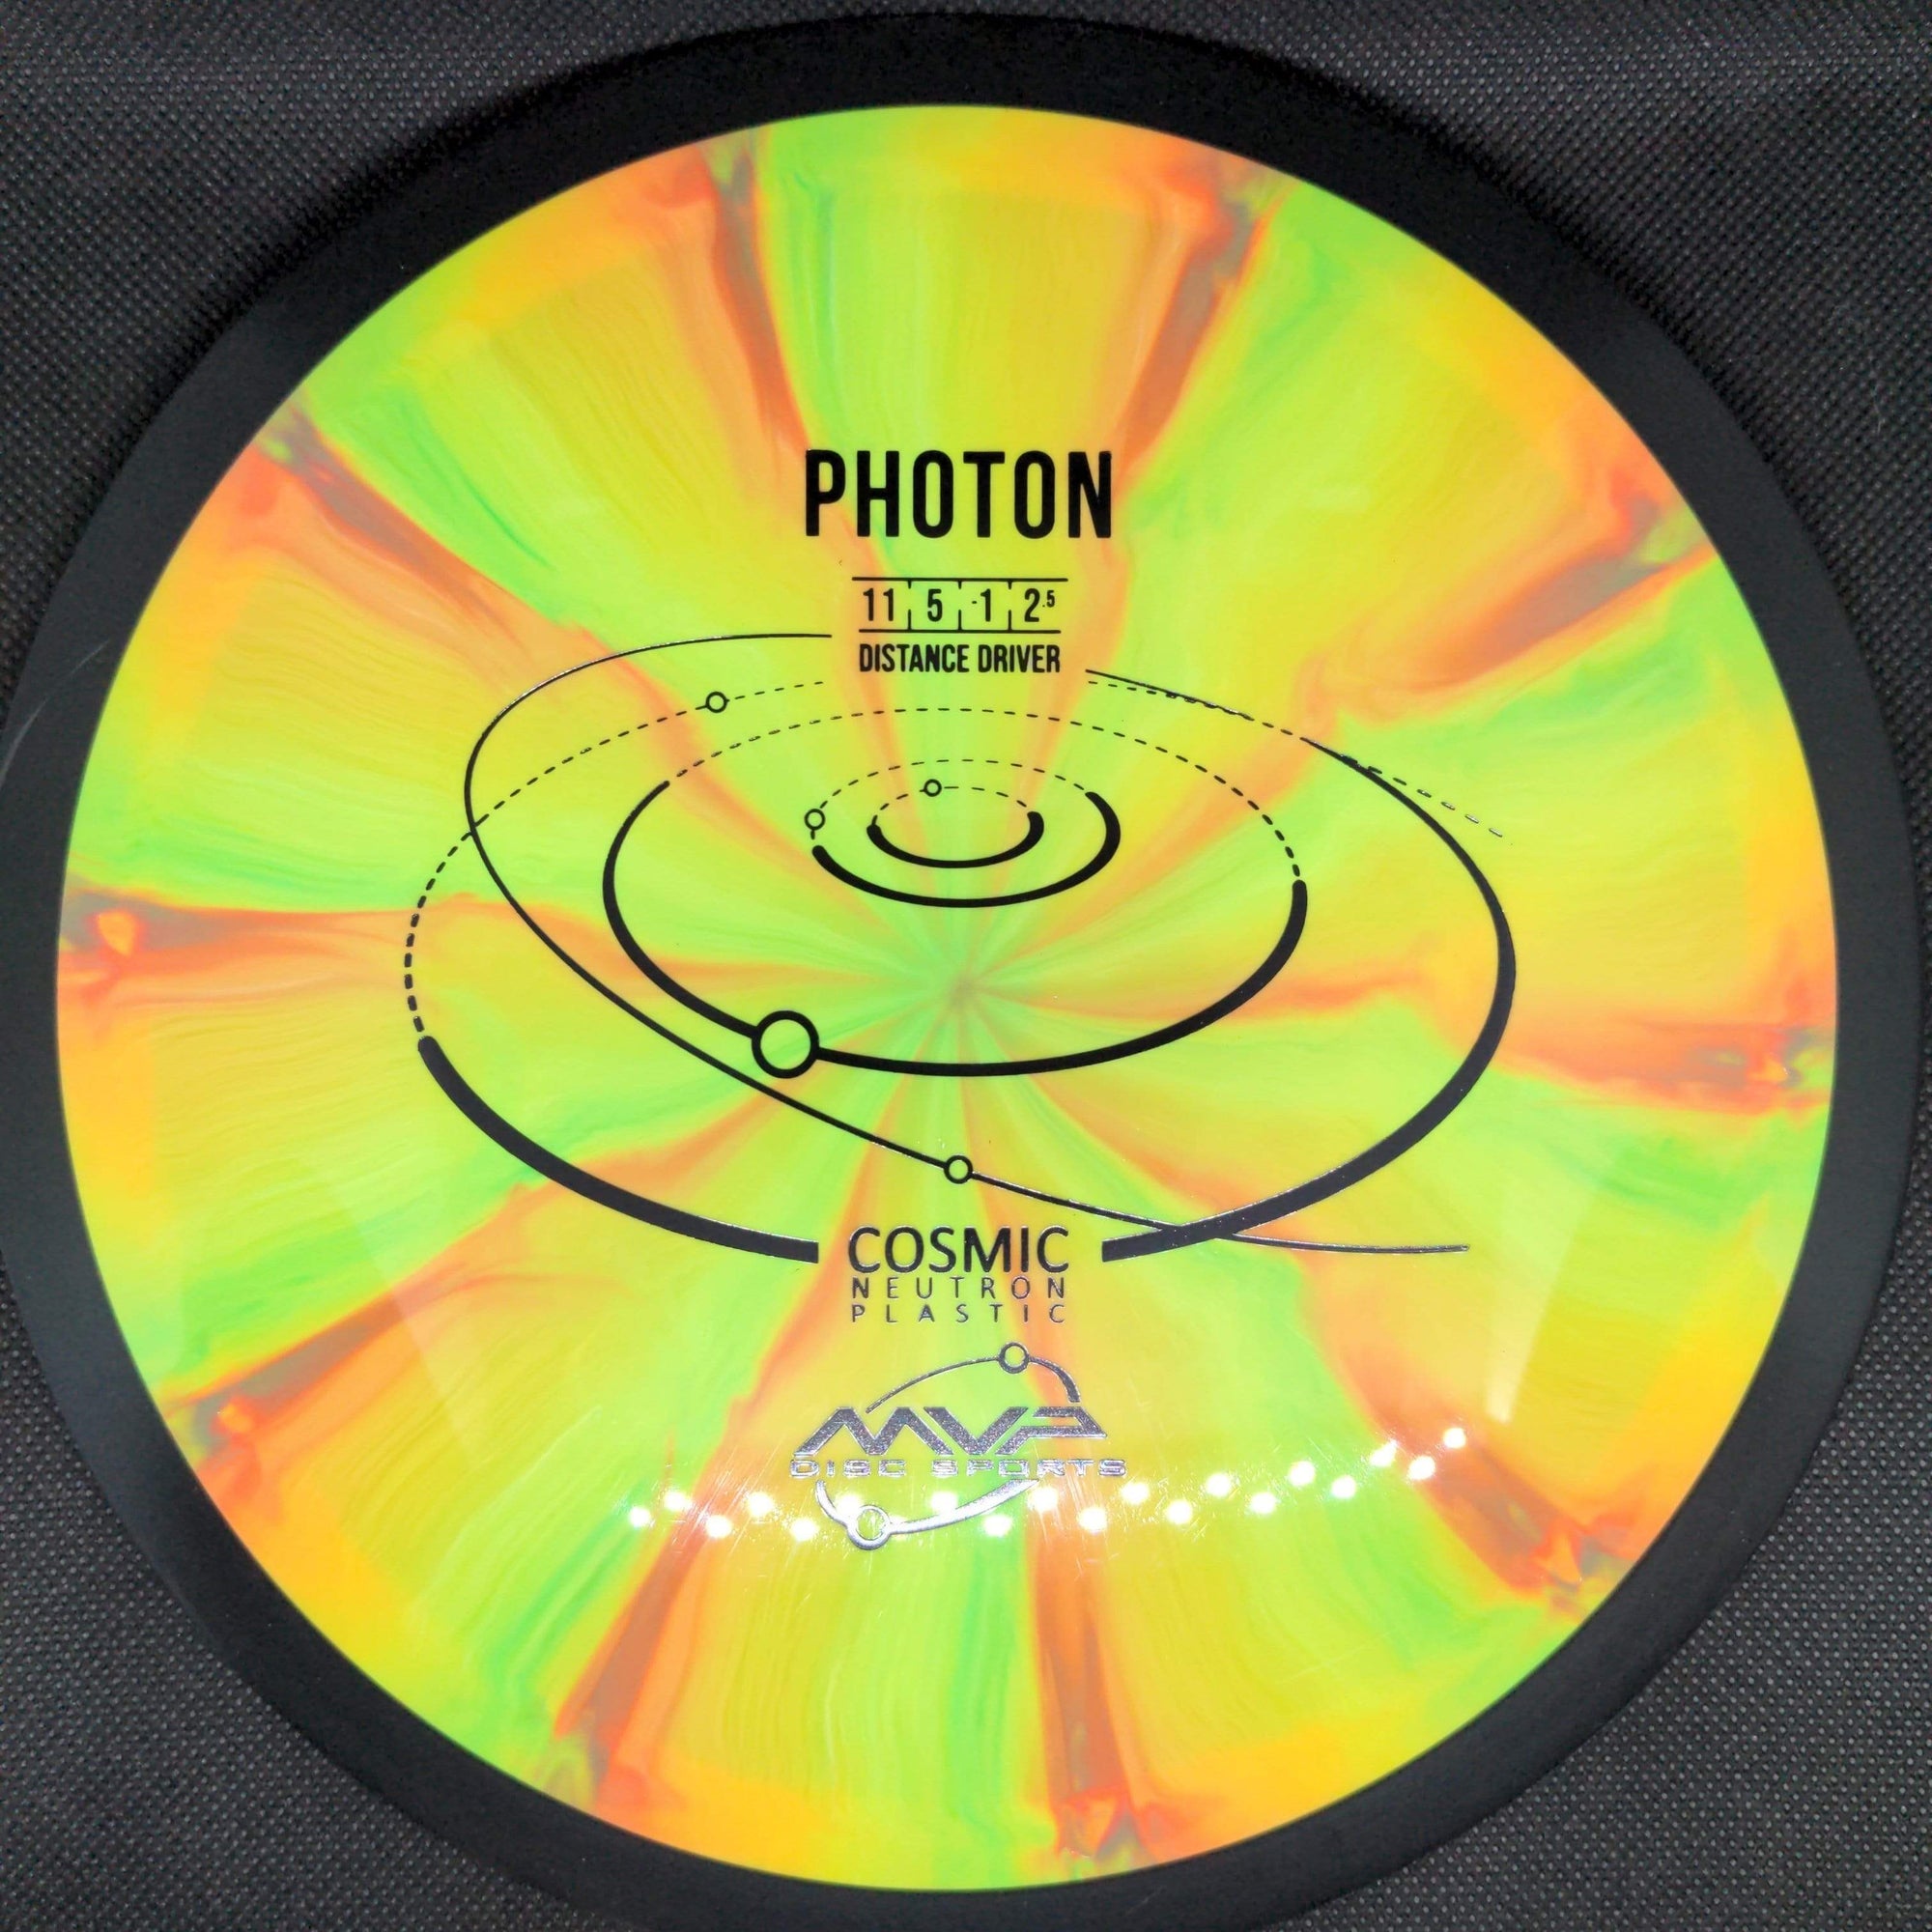 MVP Distance Driver Yellow 174g Cosmic Neutron Photon